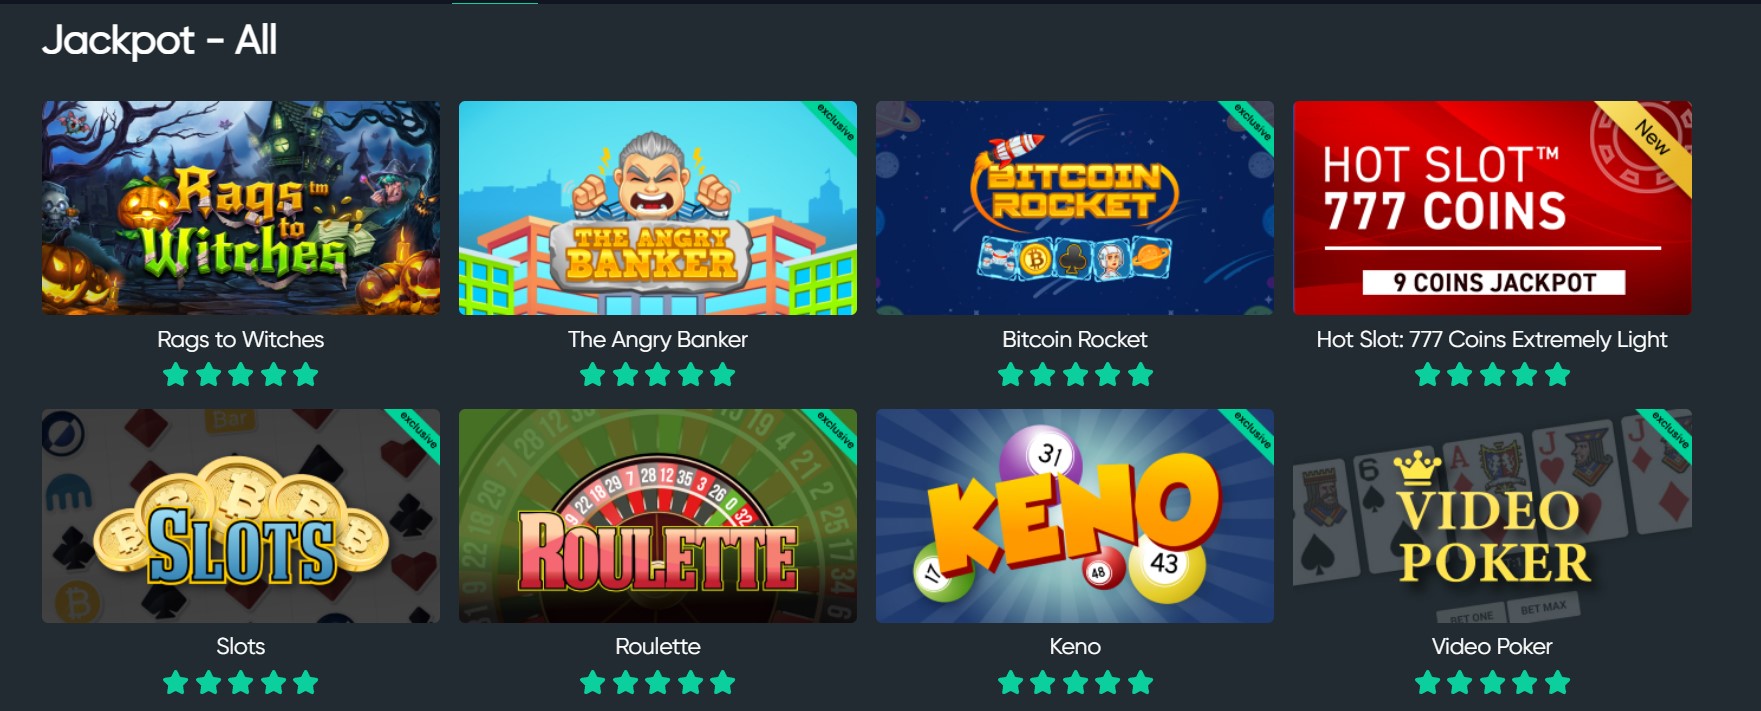 Jackpot-Spiele bitcoin.com